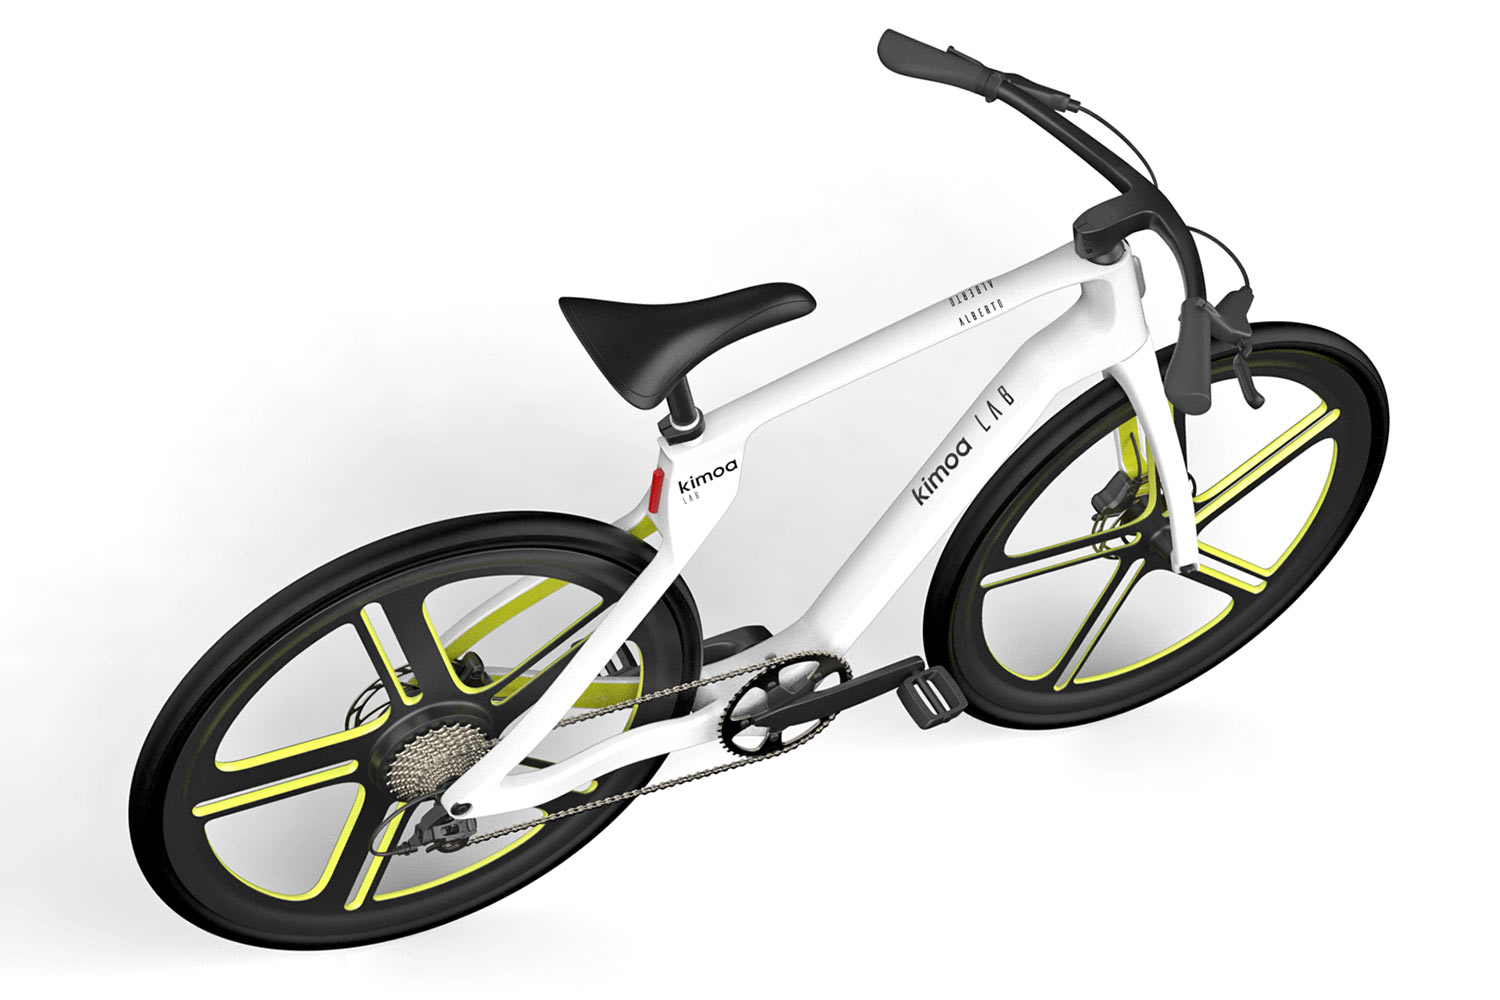 Kimoa x Arevo custom 3d-printed carbon e-bike, aangled top